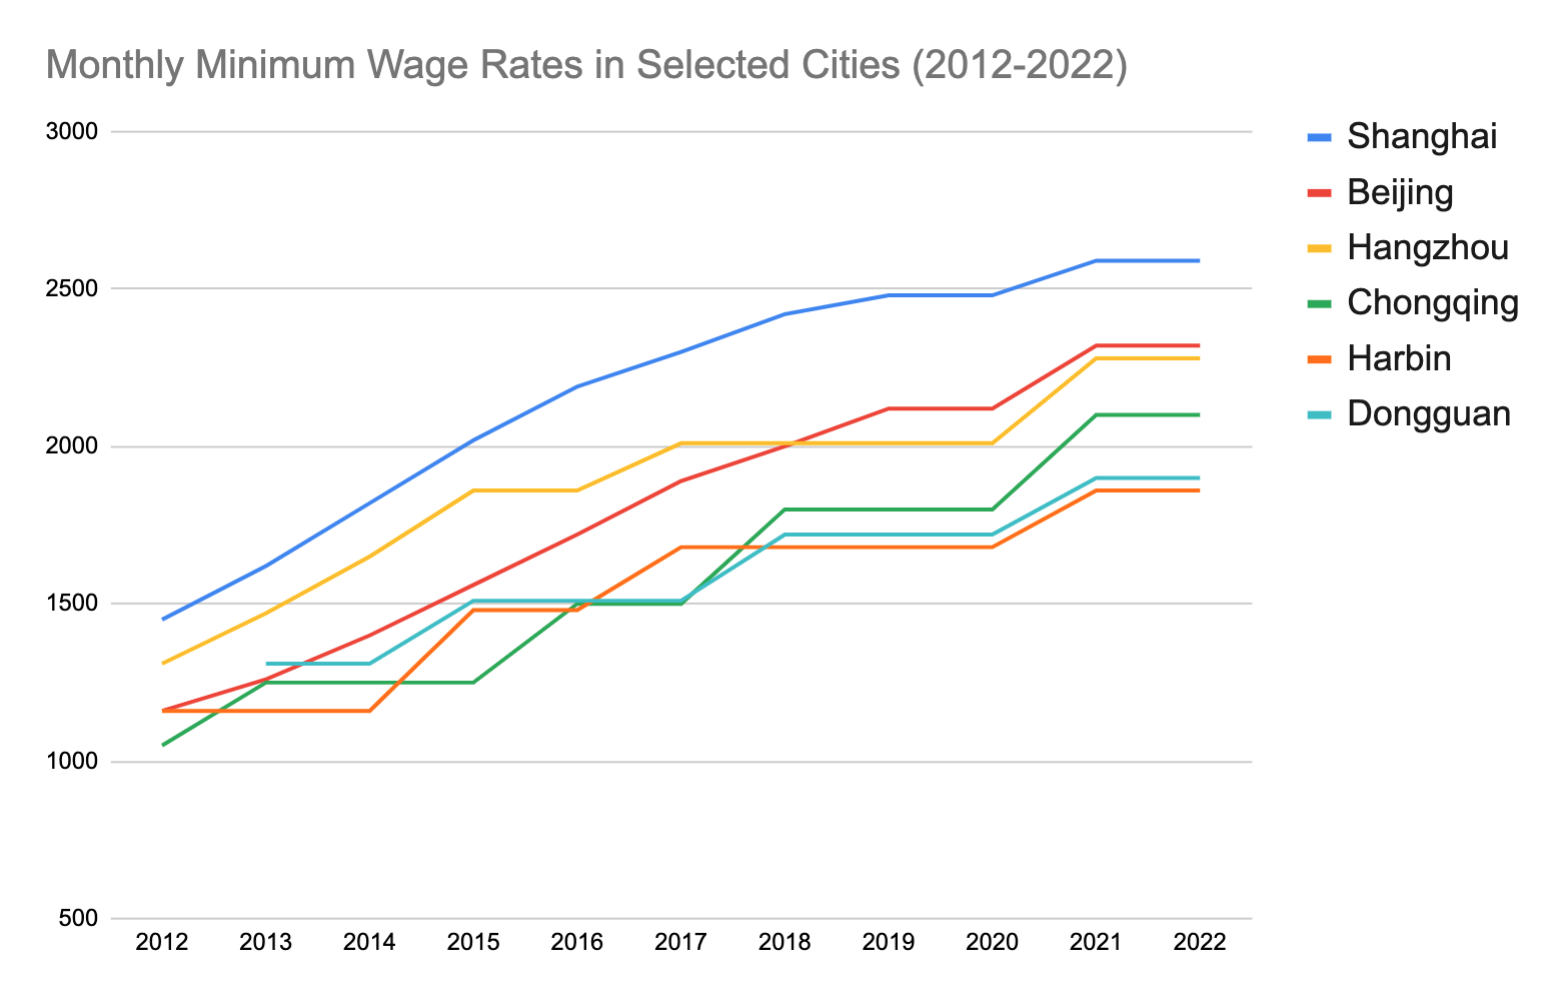 A line graph shows the monthly minimum wage from 2012 to 2022 in Shanghai, Beijing, Hangzhou, Chongqing, Harbin, and Dongguan